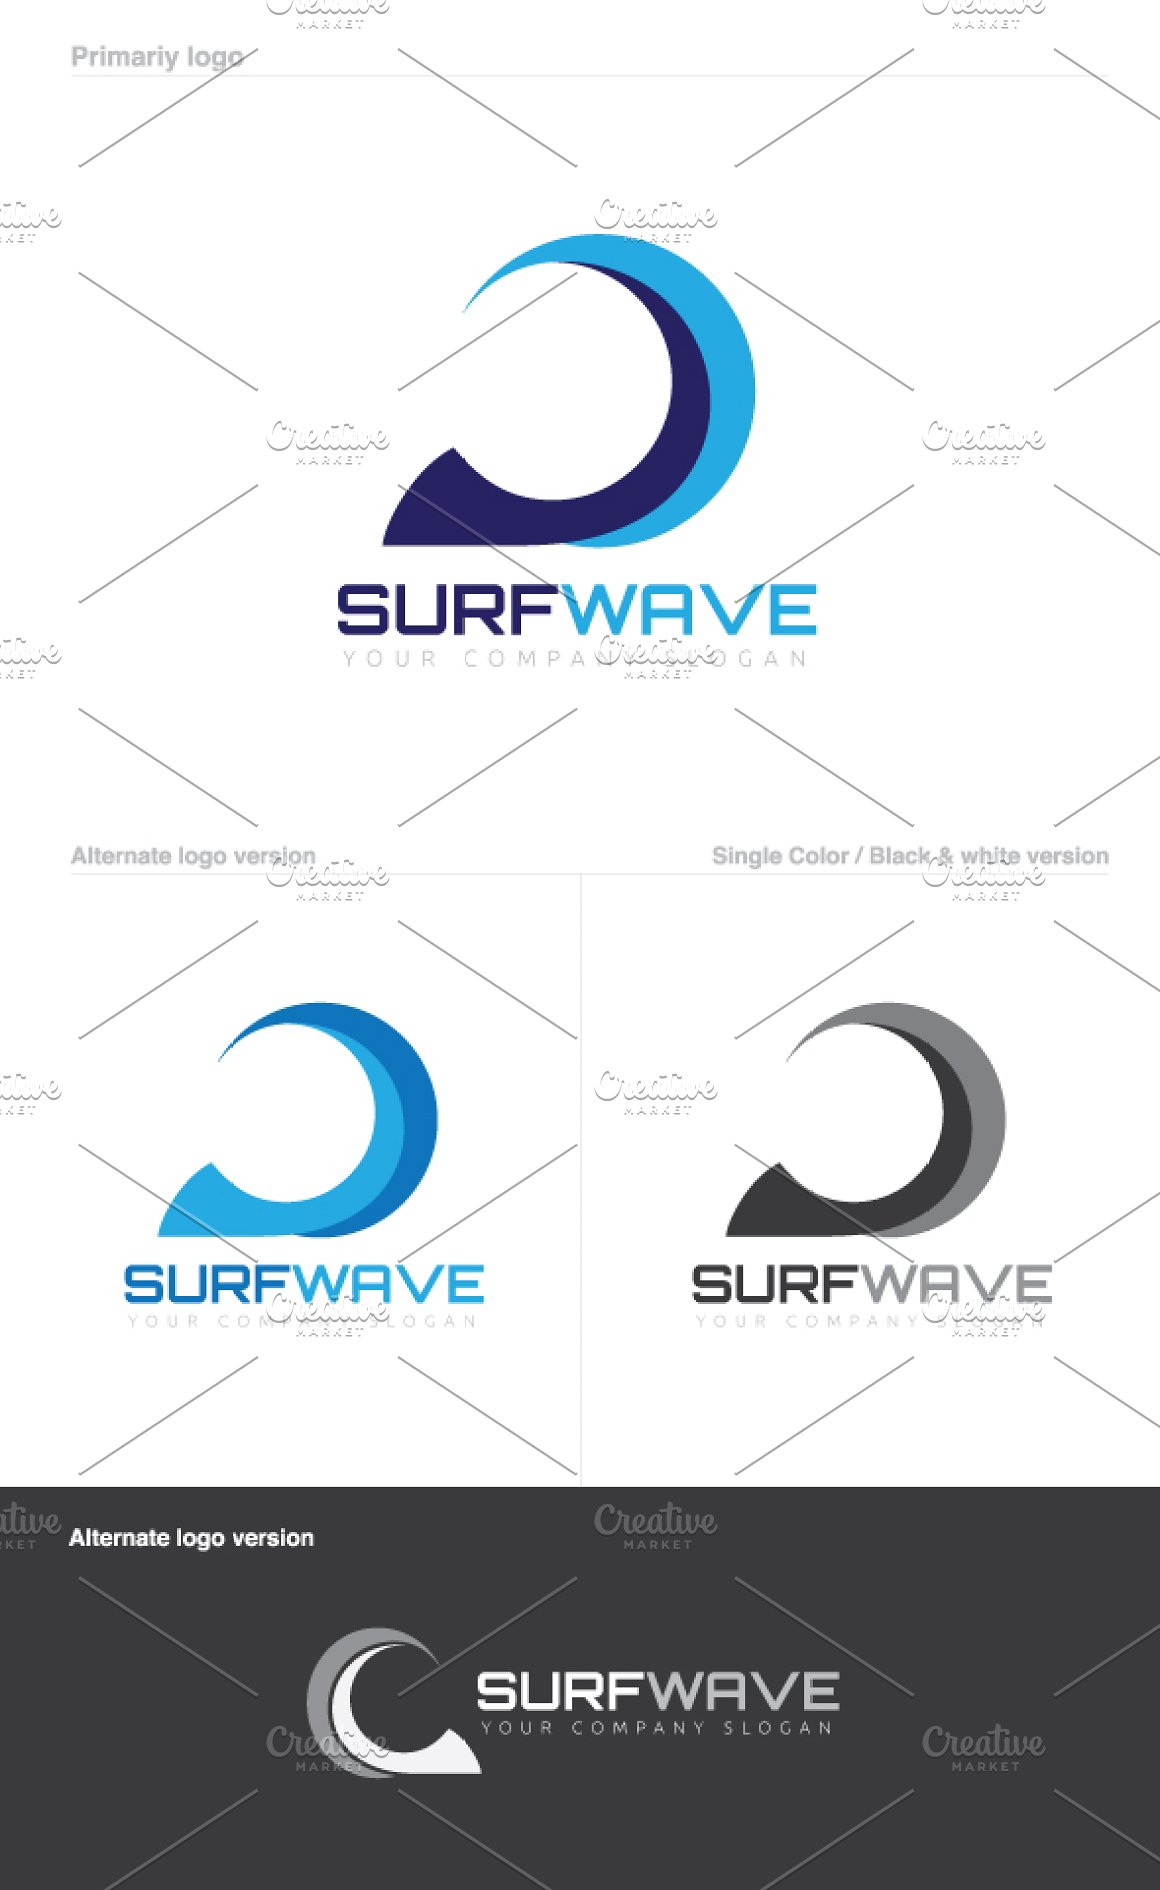 Three wave logo options.